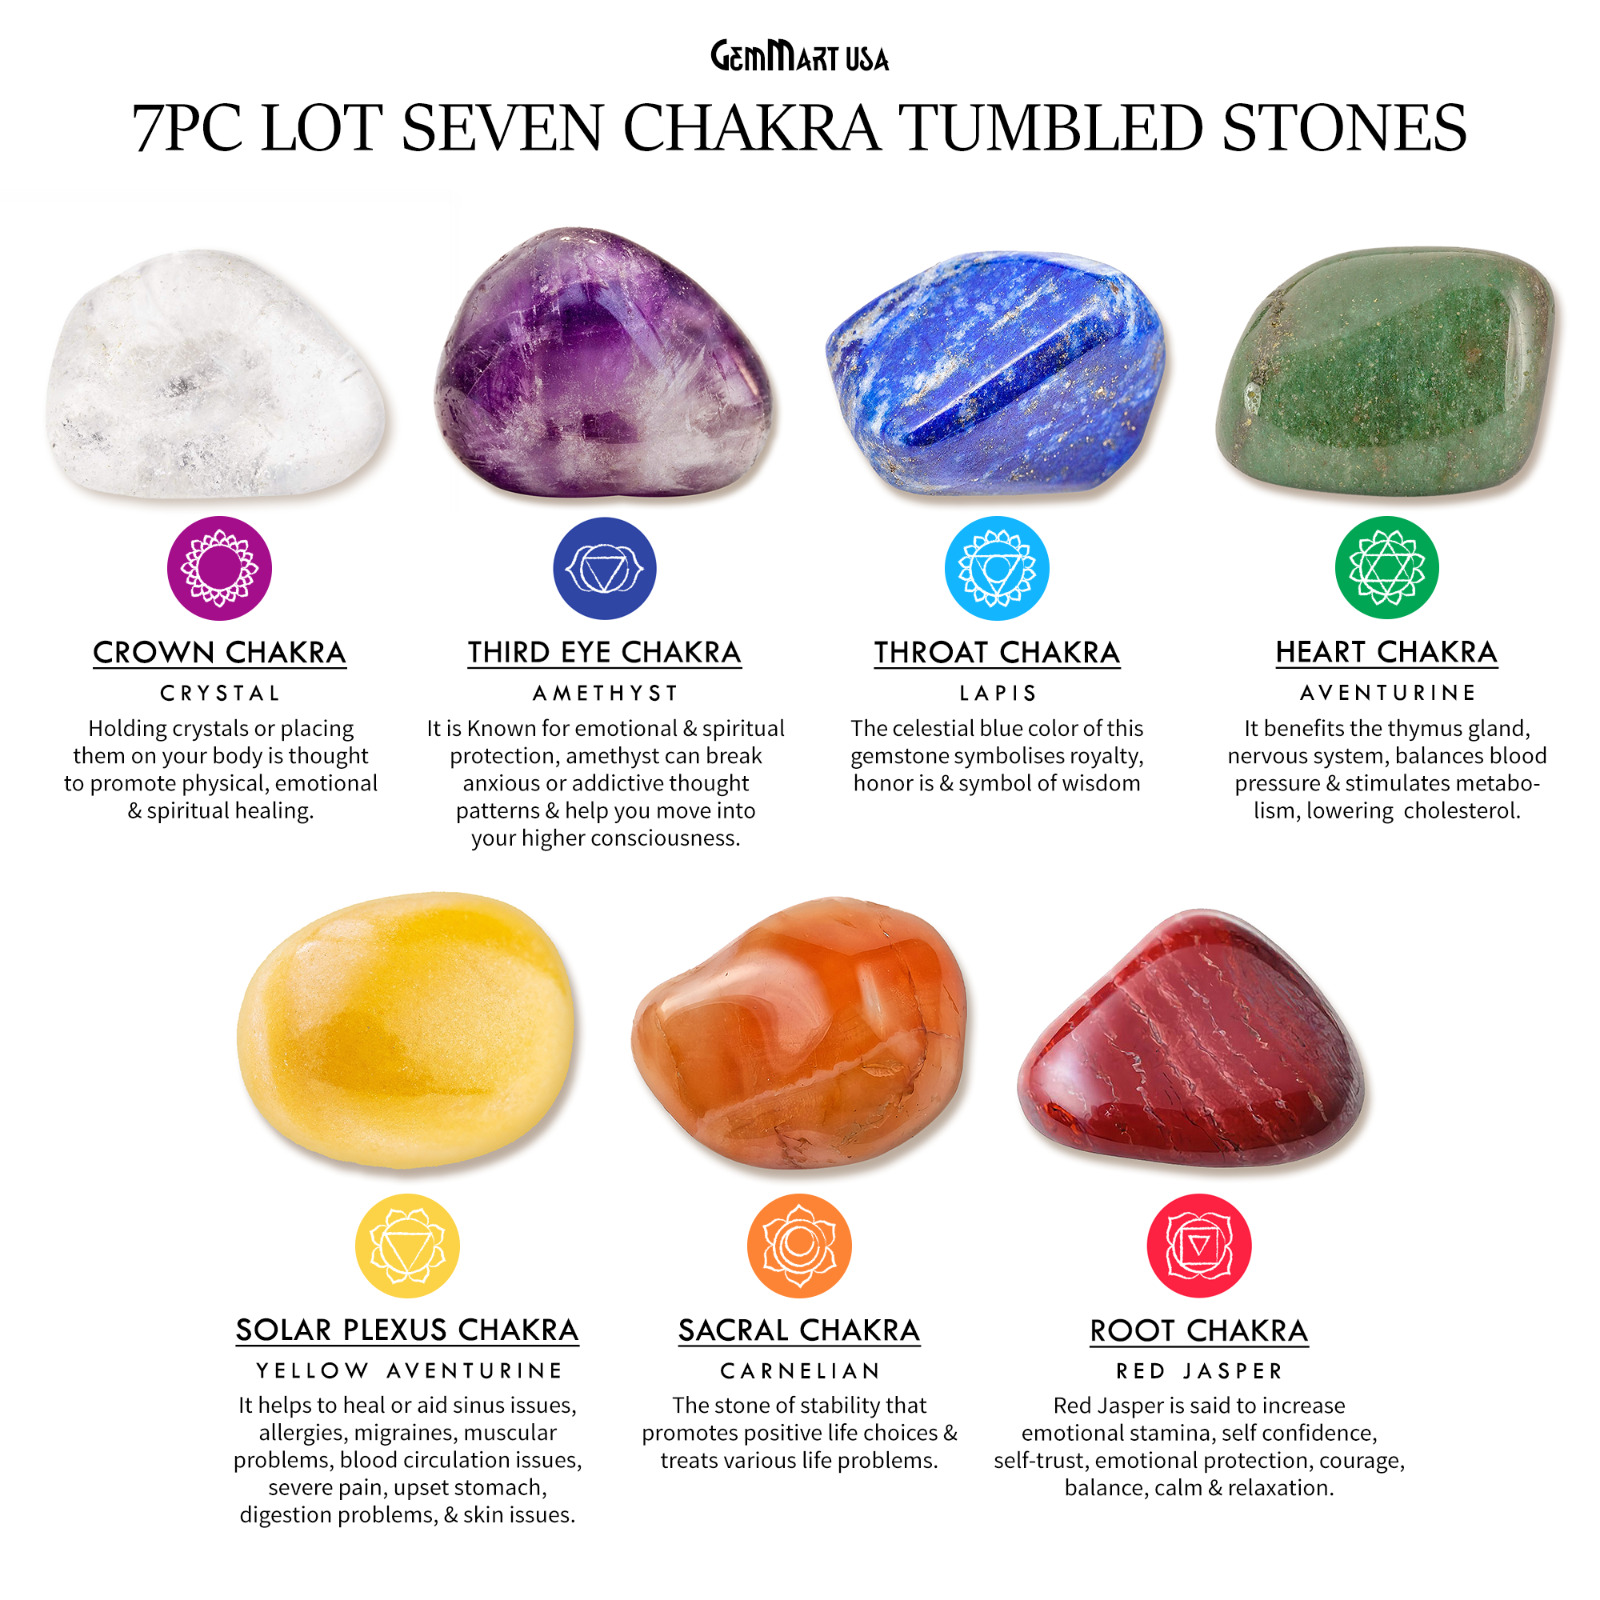 7PC Lot Seven Chakra Tumbled Stone, Natural Gemstones Runes Rocks Peace of Mind